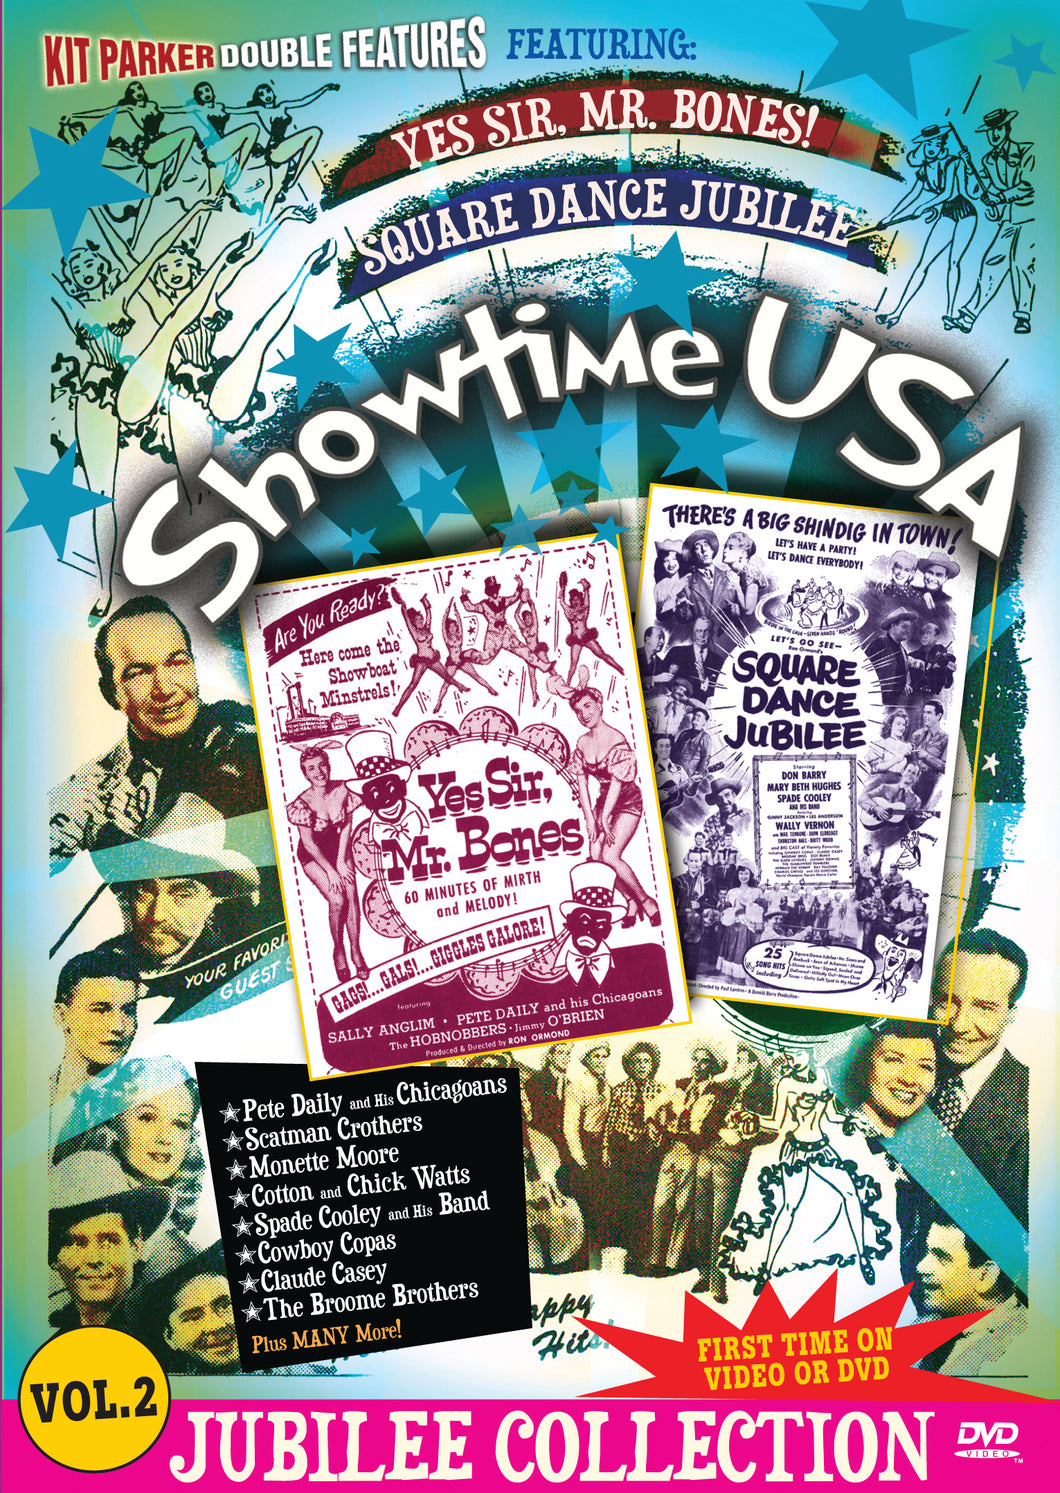 Showtime Usa Vol 2 (DVD)